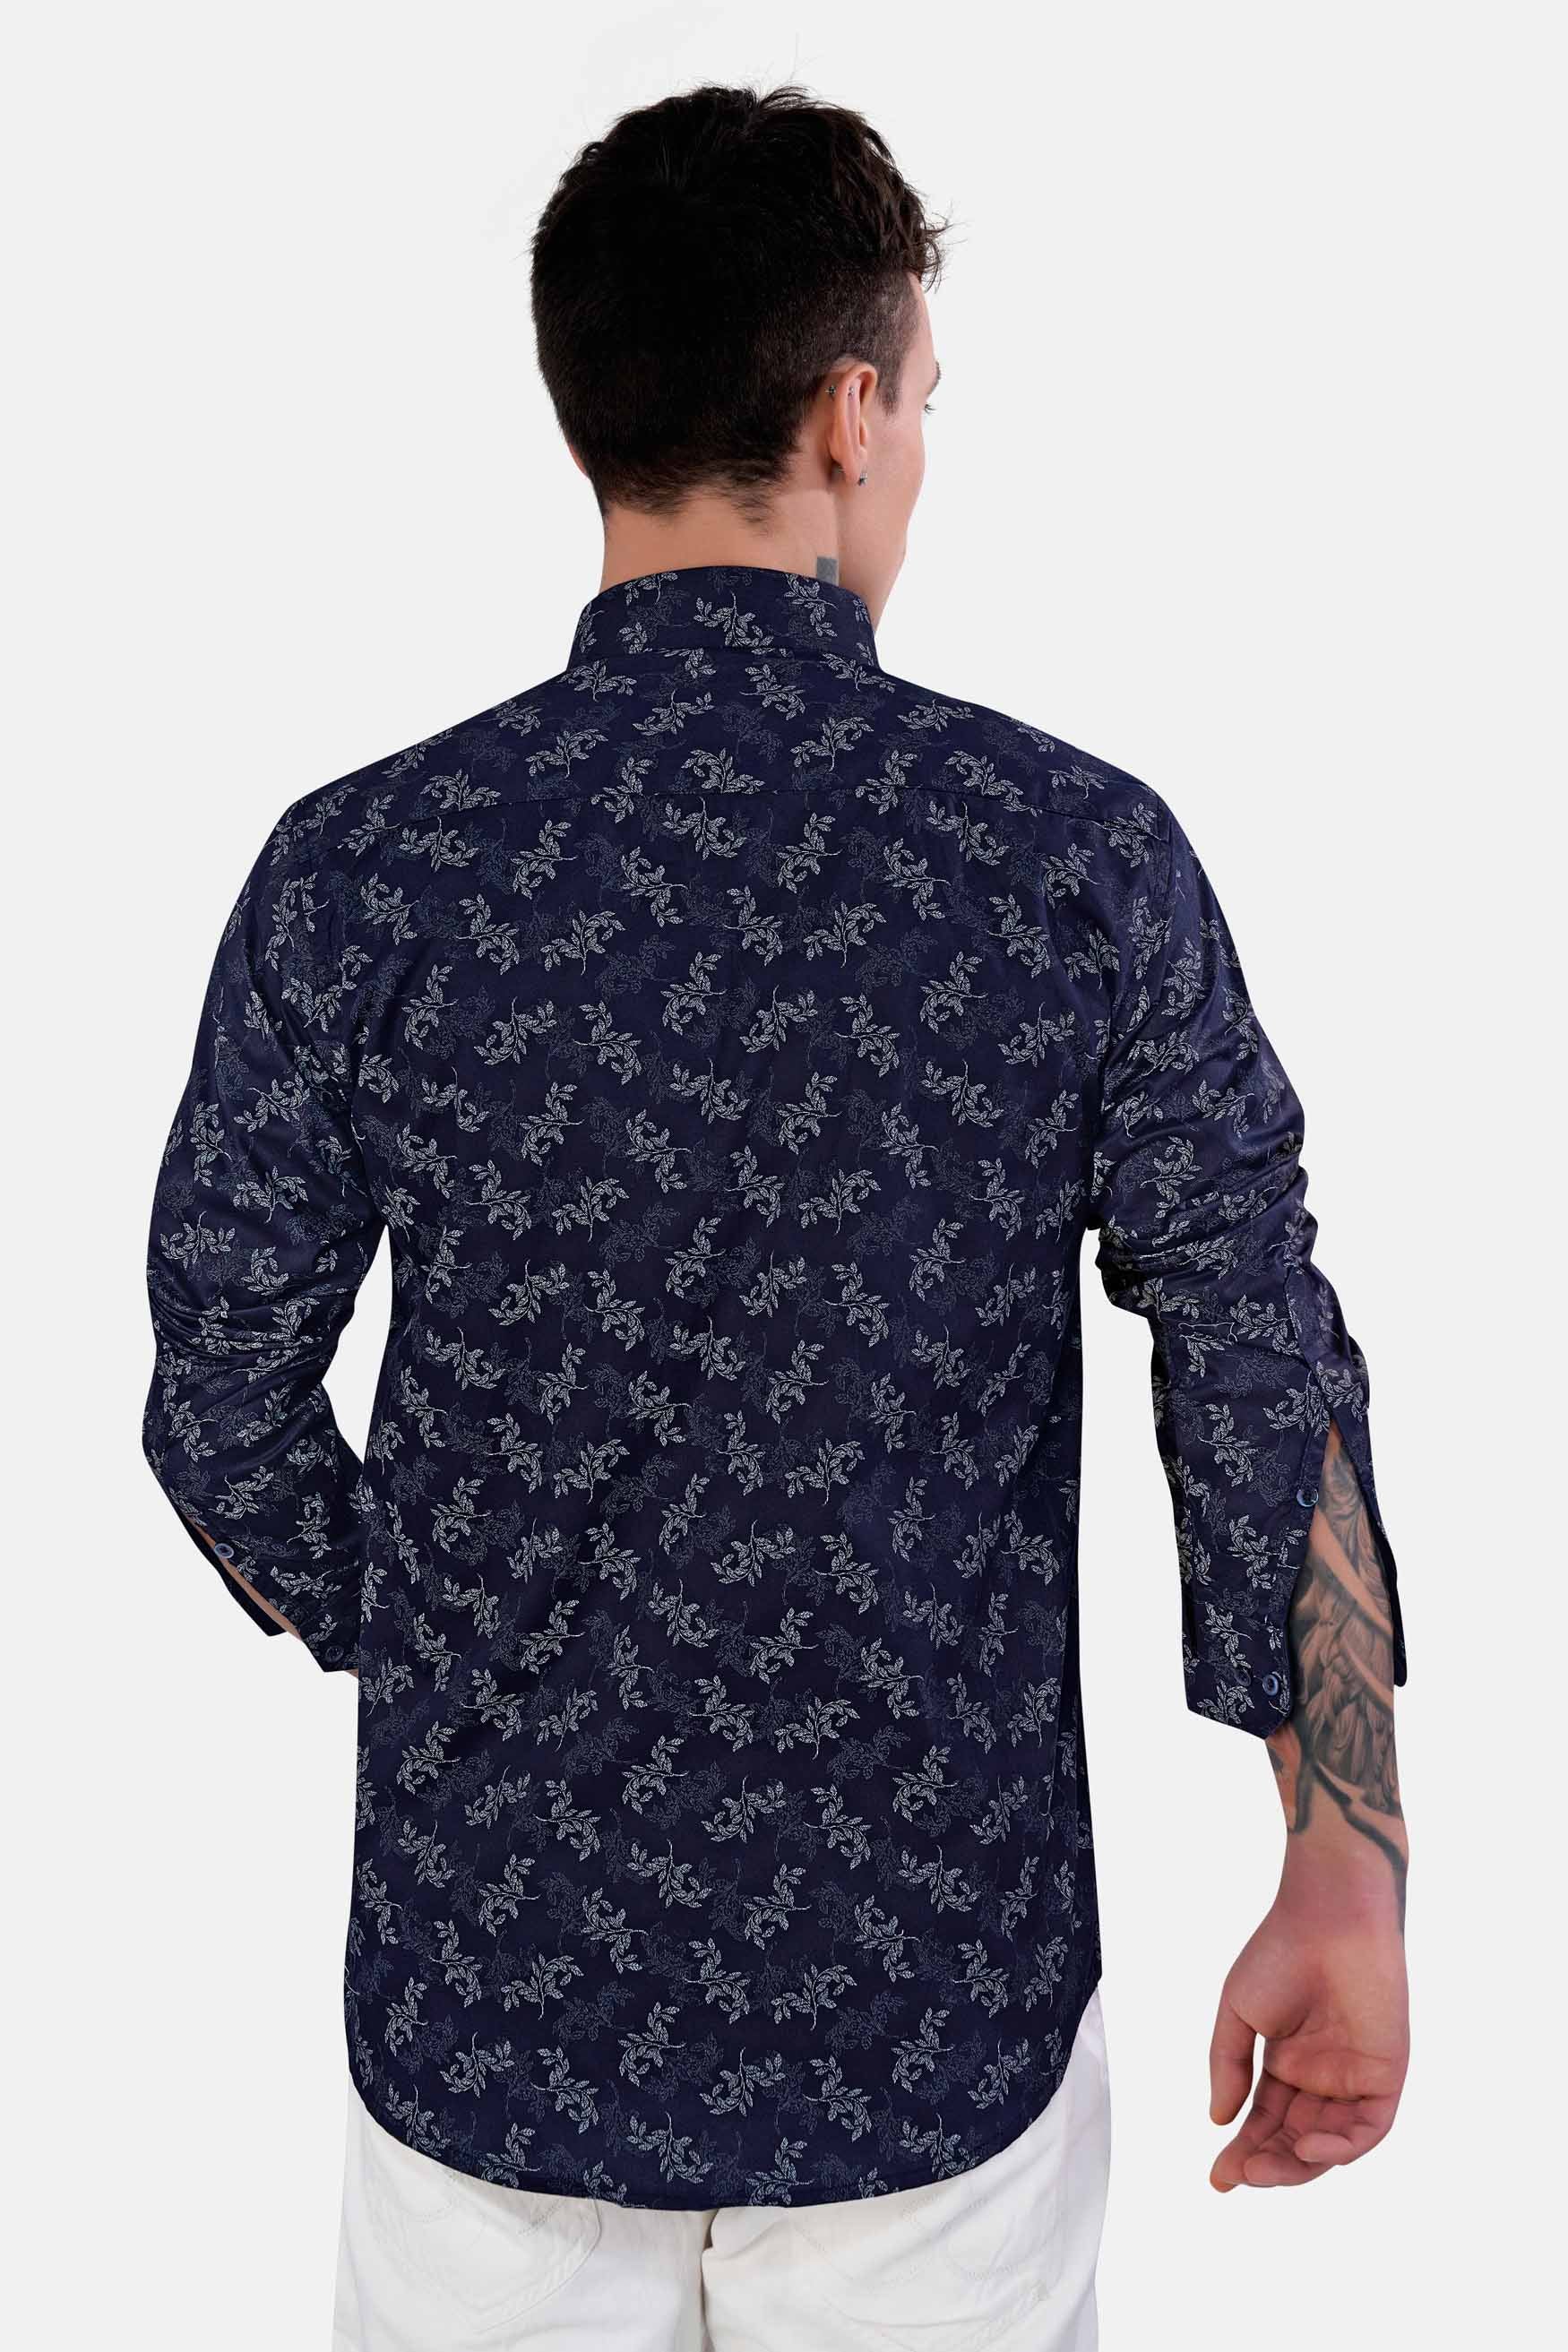 Haiti Blue Leaves Printed Twill Premium Cotton Shirt